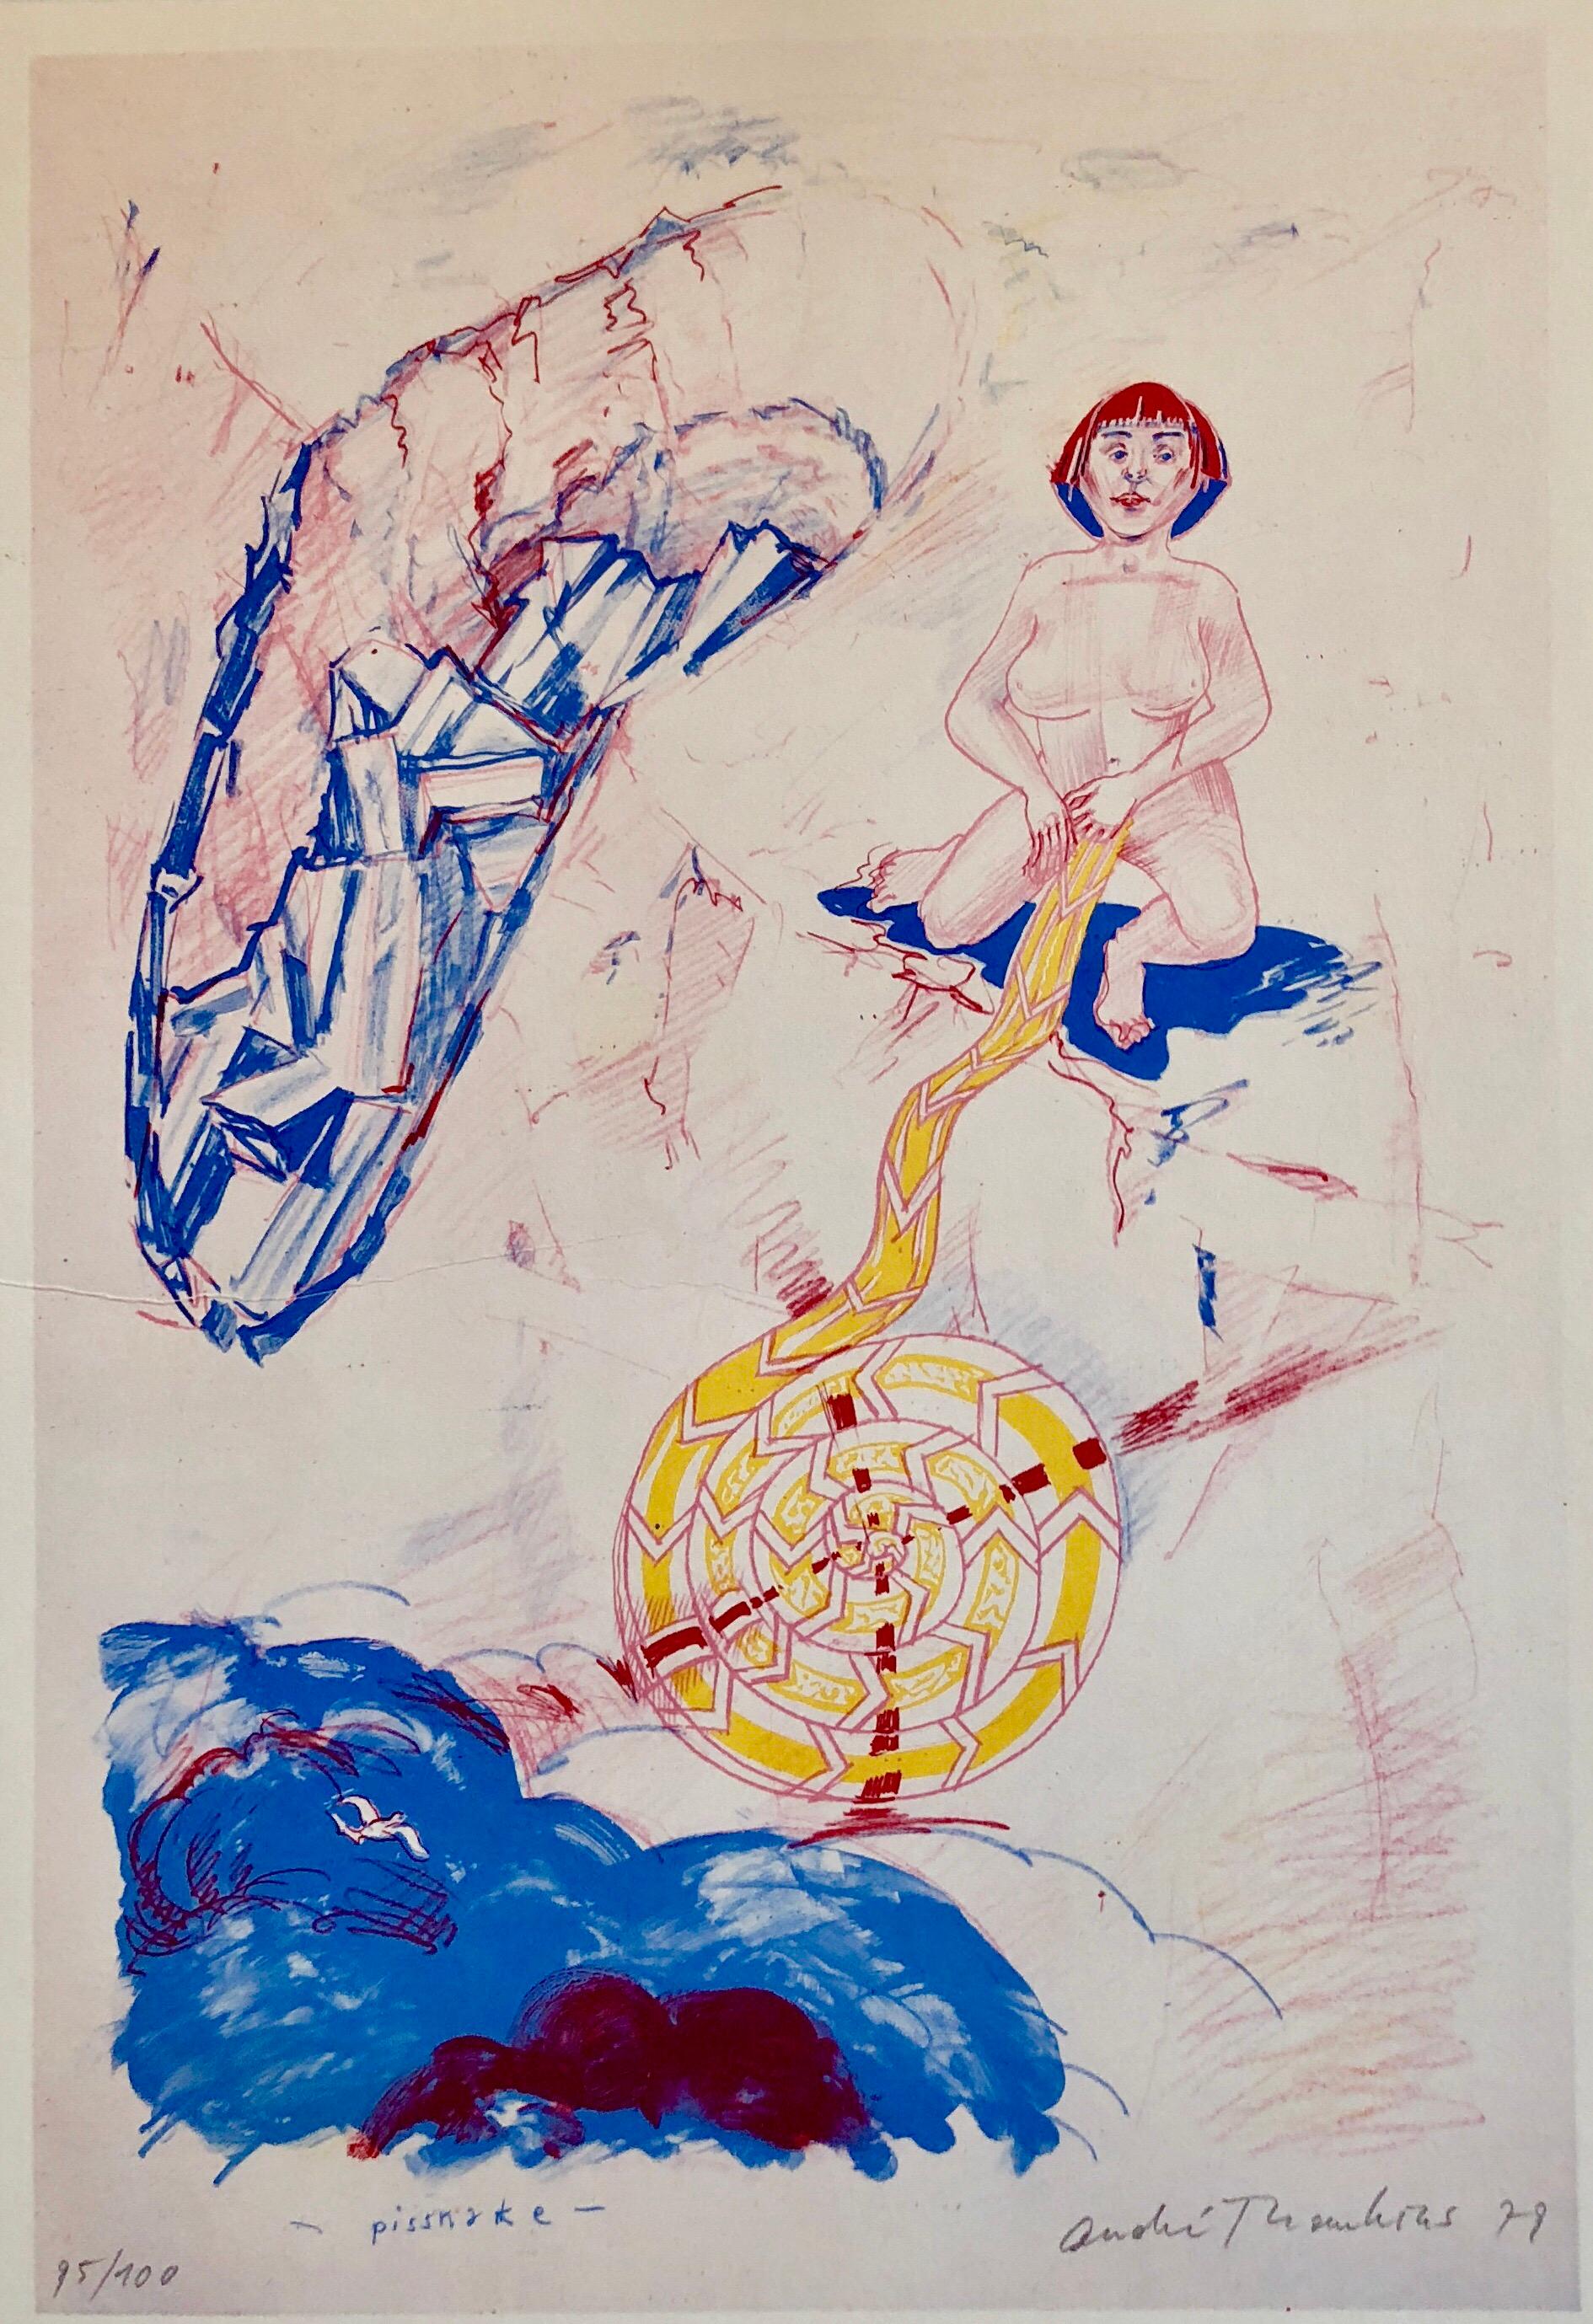 André Thomkins Abstract Print – Modernistischer Schweizer farbenfroher Surrealismus der 1970er Jahre, signierte Dada-Lithographie Andre Thomkins